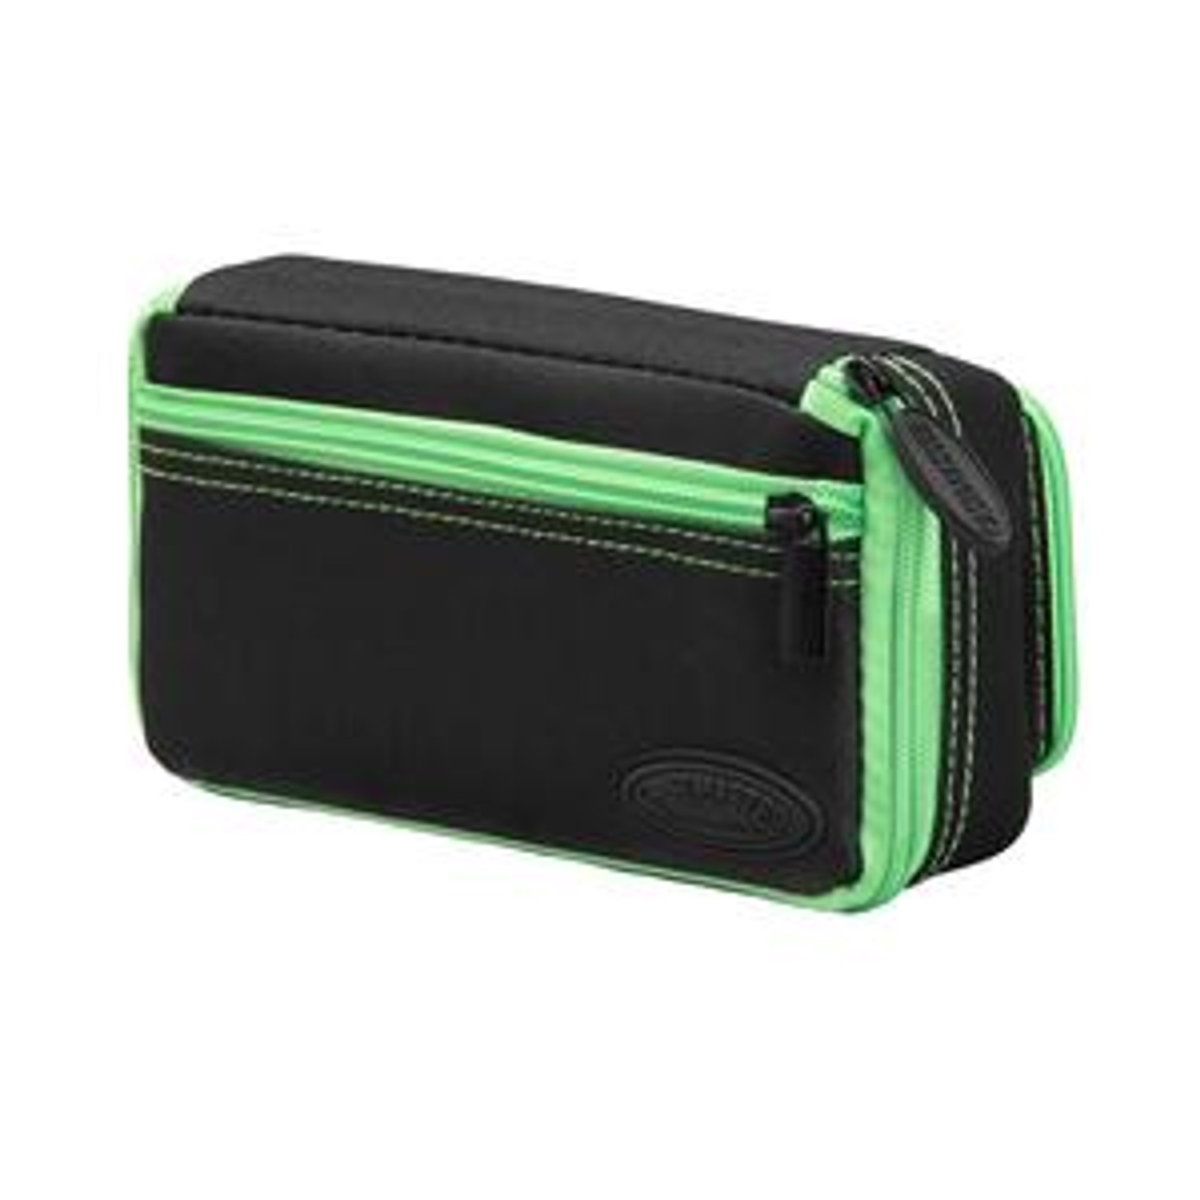 Picture of Casemaster 36-0701-10 Plazma Plus Dart Case with Zipper & Phone Pocket&#44; Black & Green - 3 Darts